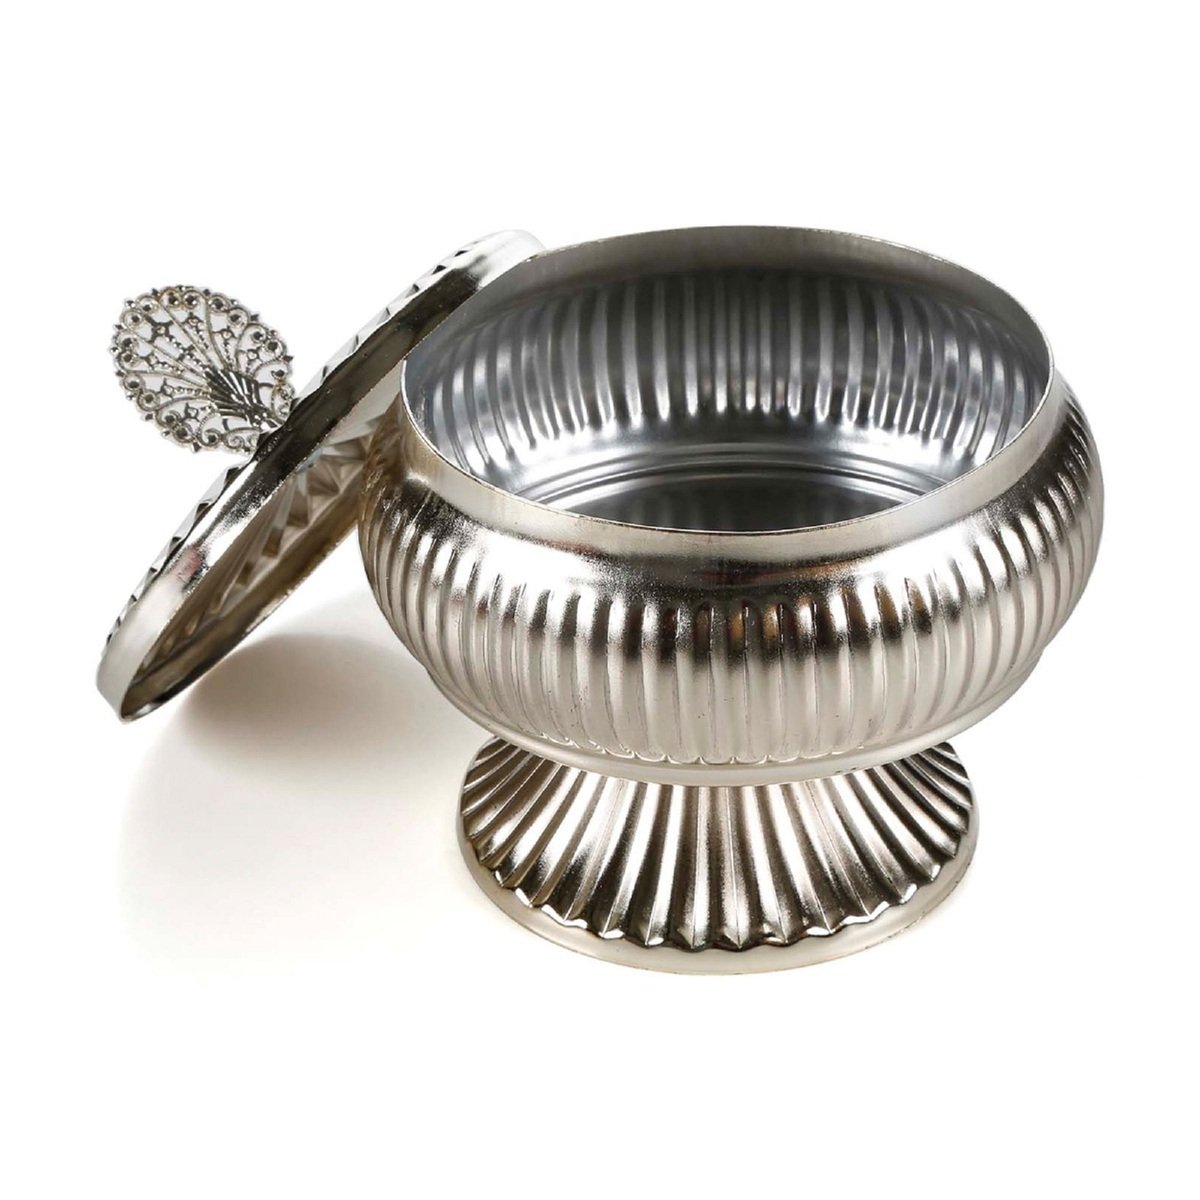 Helvacioglu Silver Decorative Bowl with Lid, HEL15